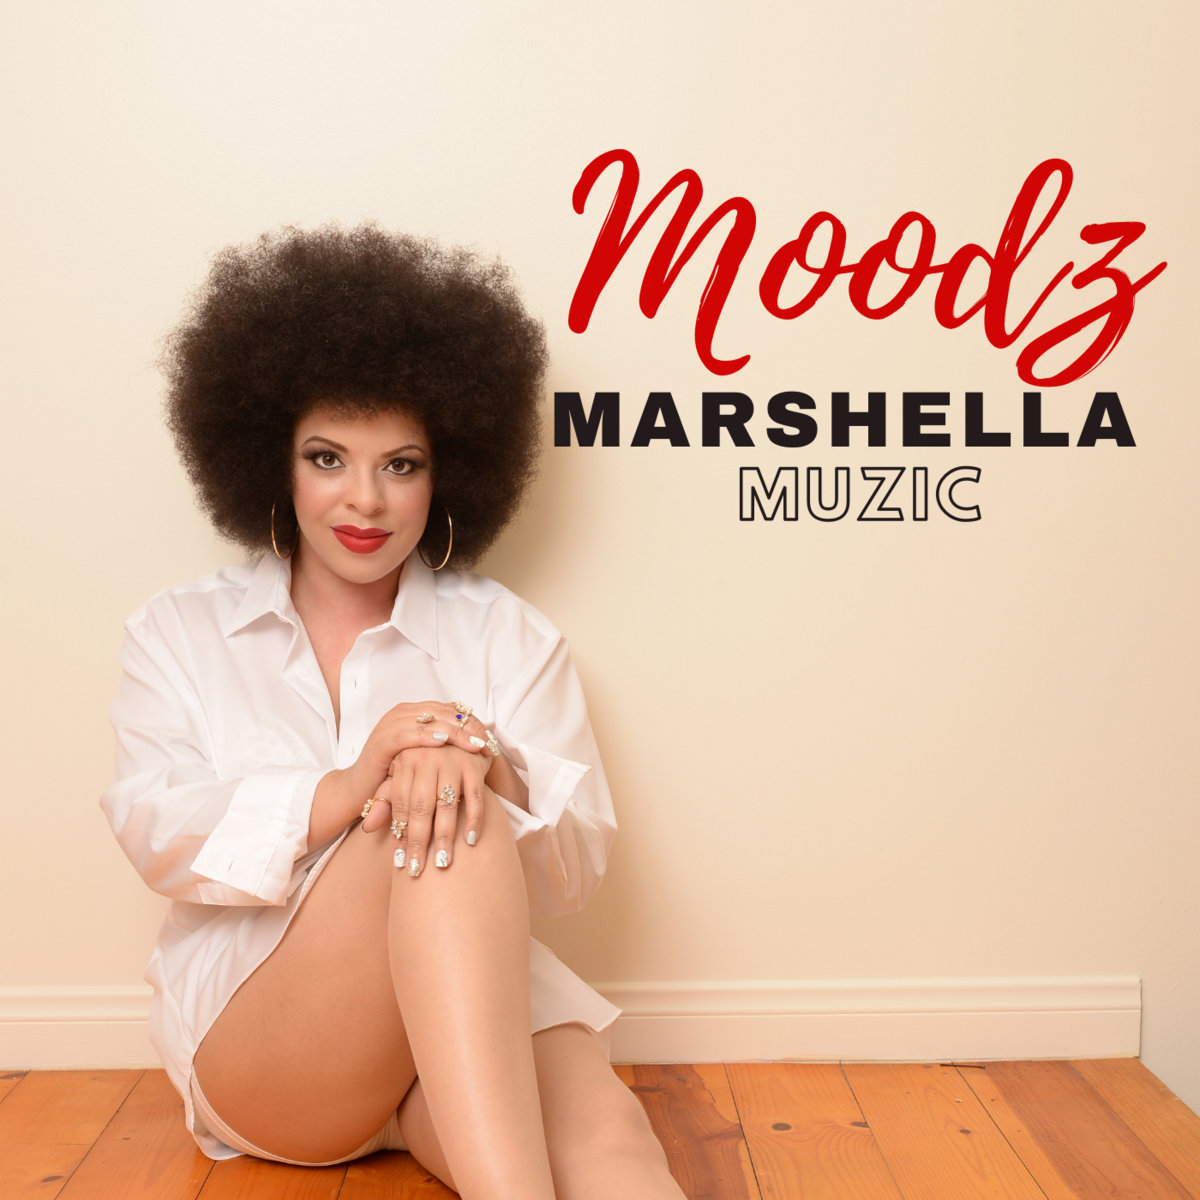 Listen To “Moodz” By Marshella Muzic